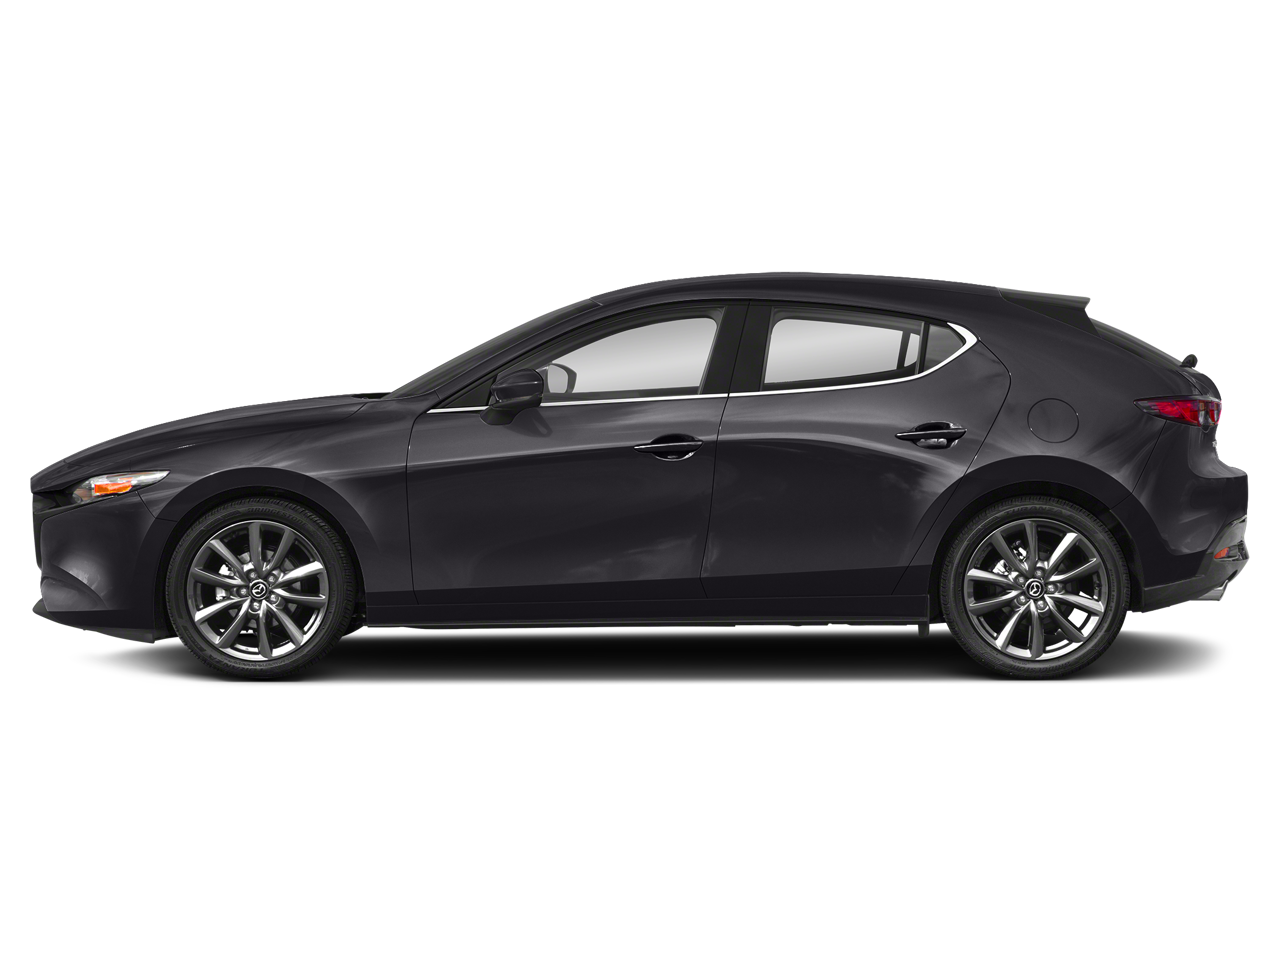 2022 Mazda Mazda3 Hatchback Select